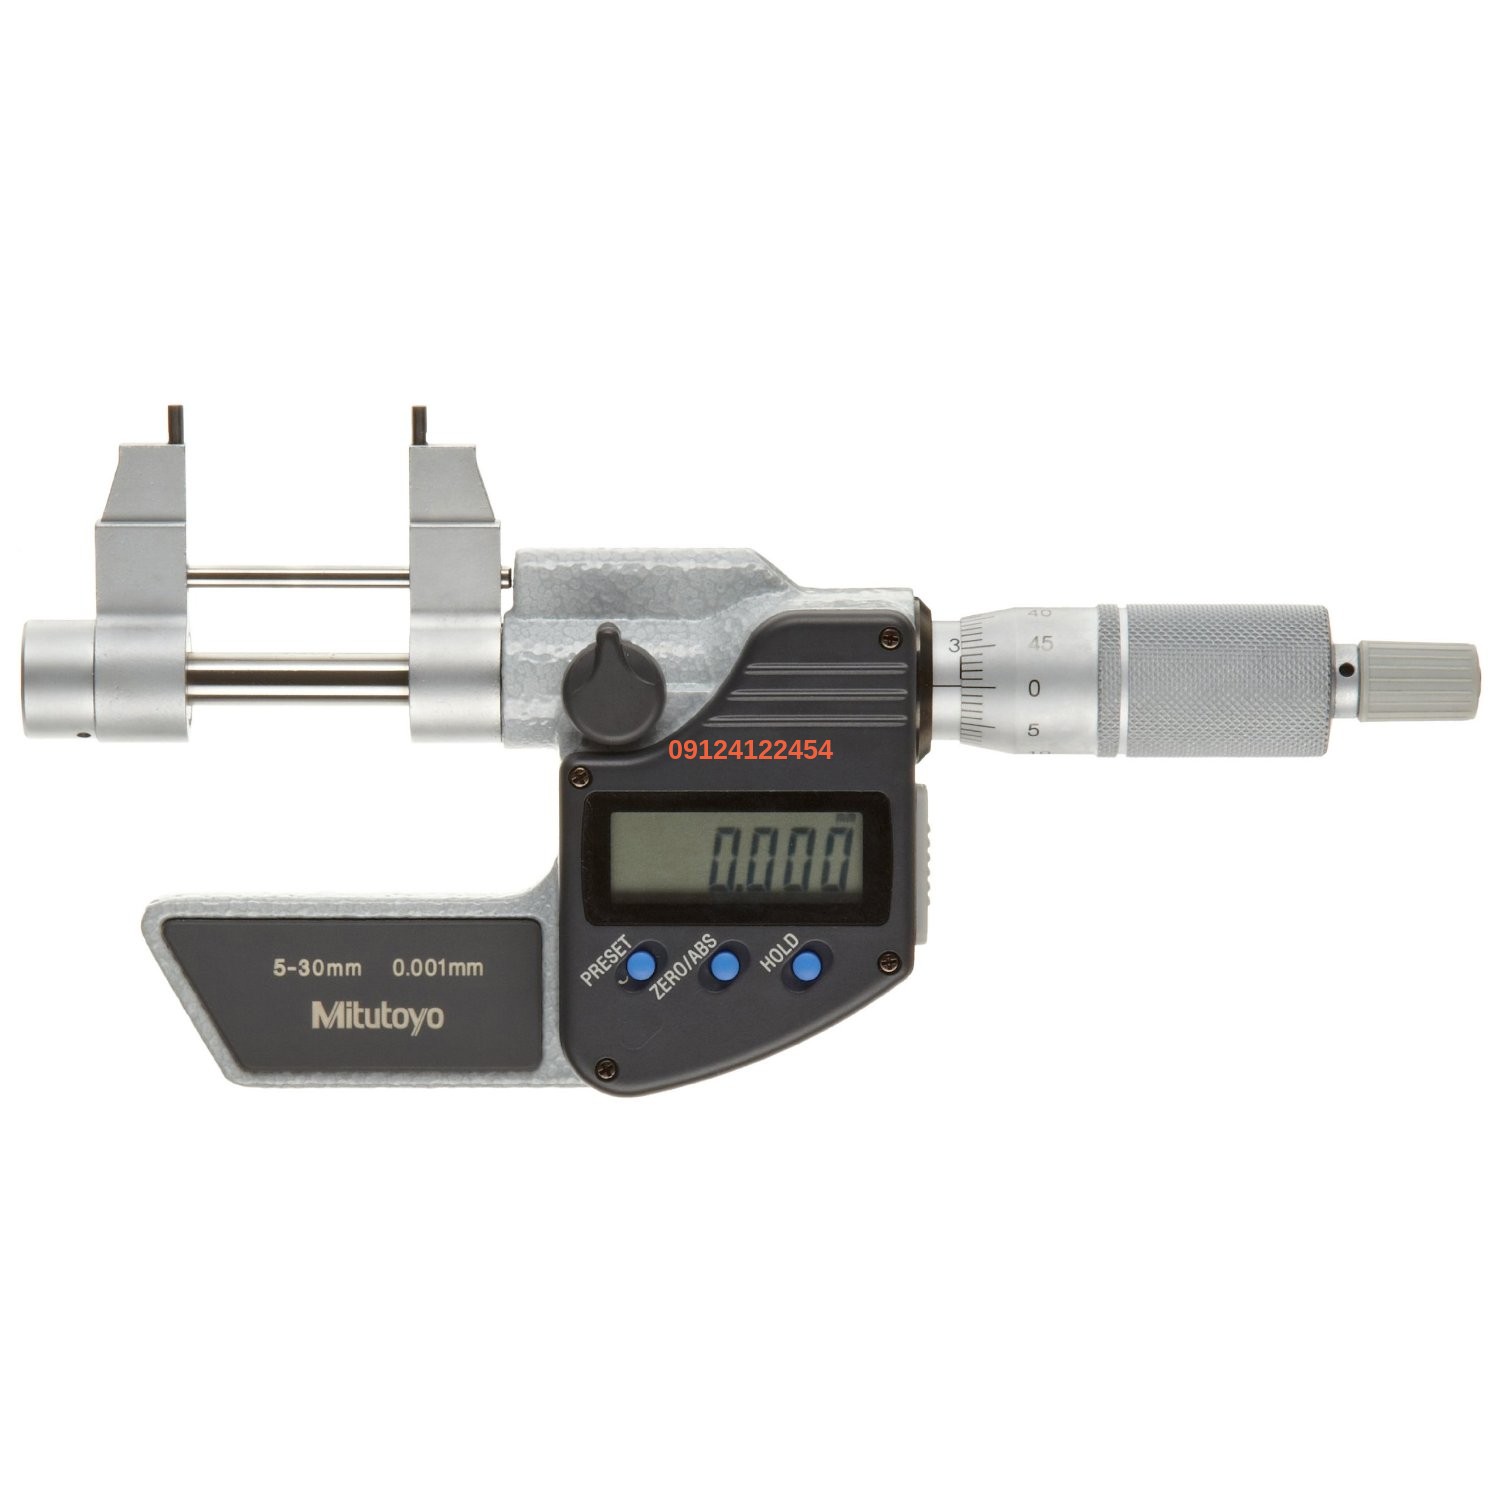 MITUTOYO 345 250 Digimatic Inside Micrometer